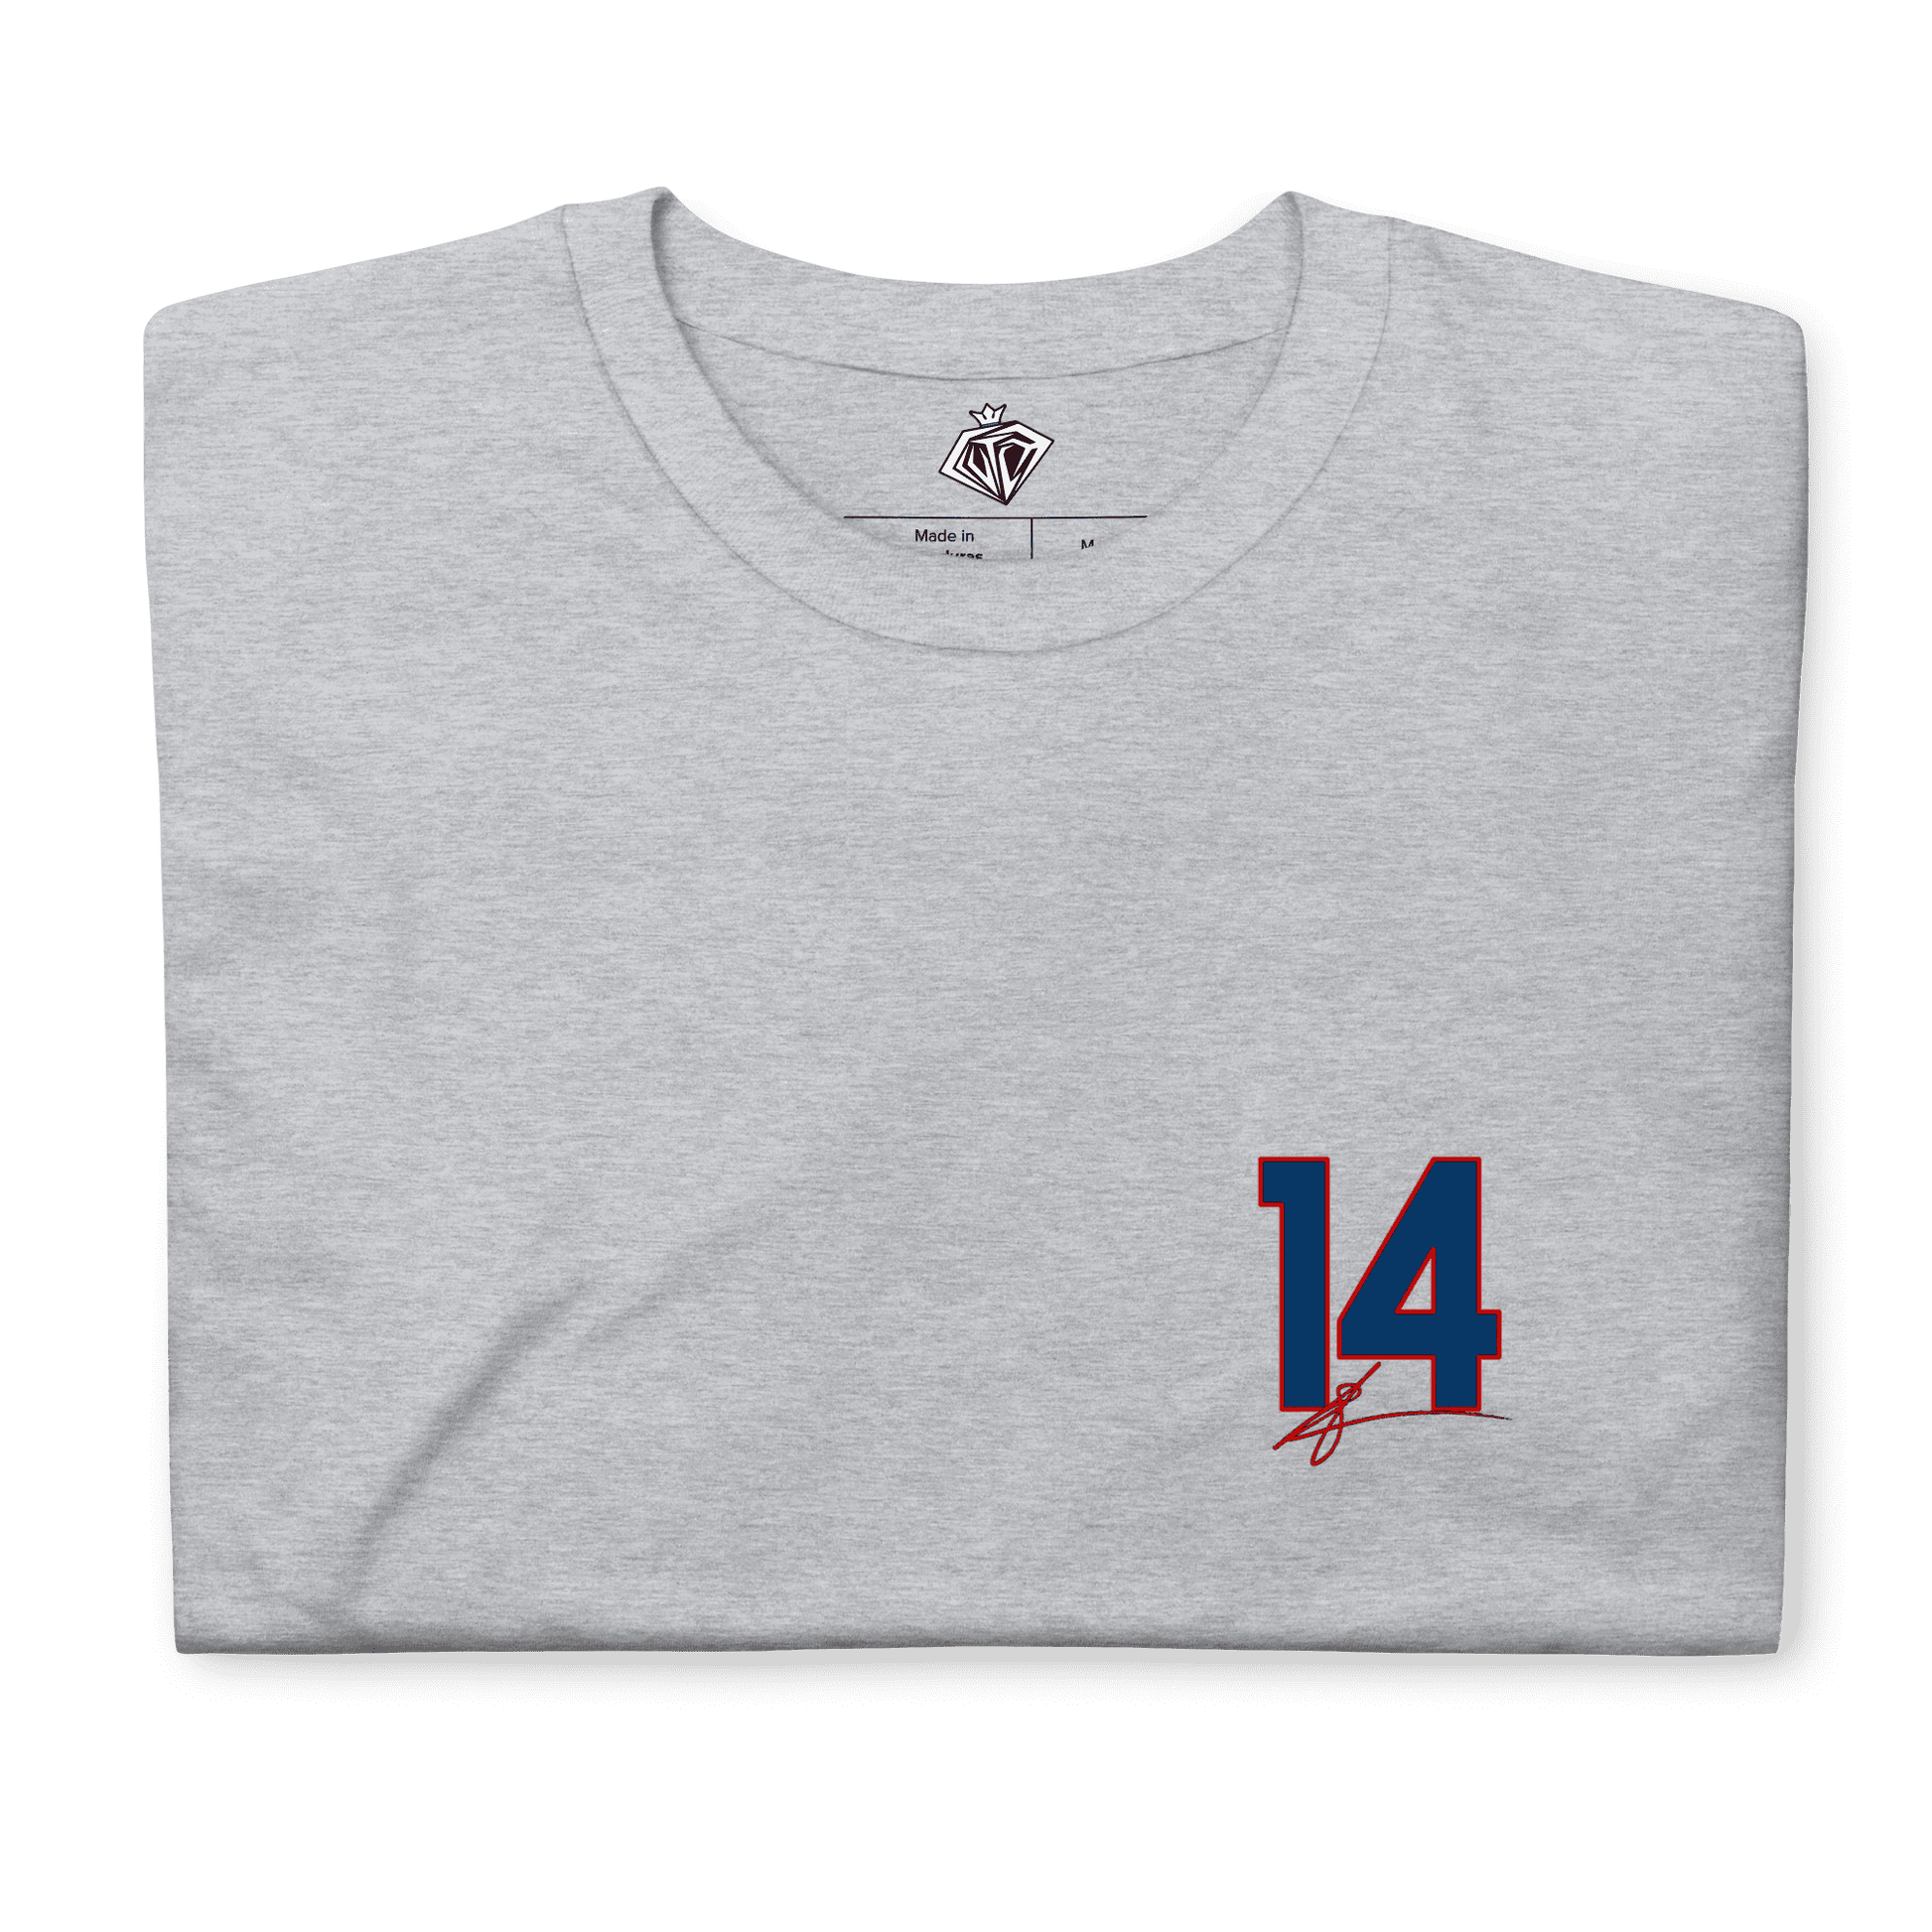 Tyriq Starks | Player Patch T-shirt - Clutch - Clothing